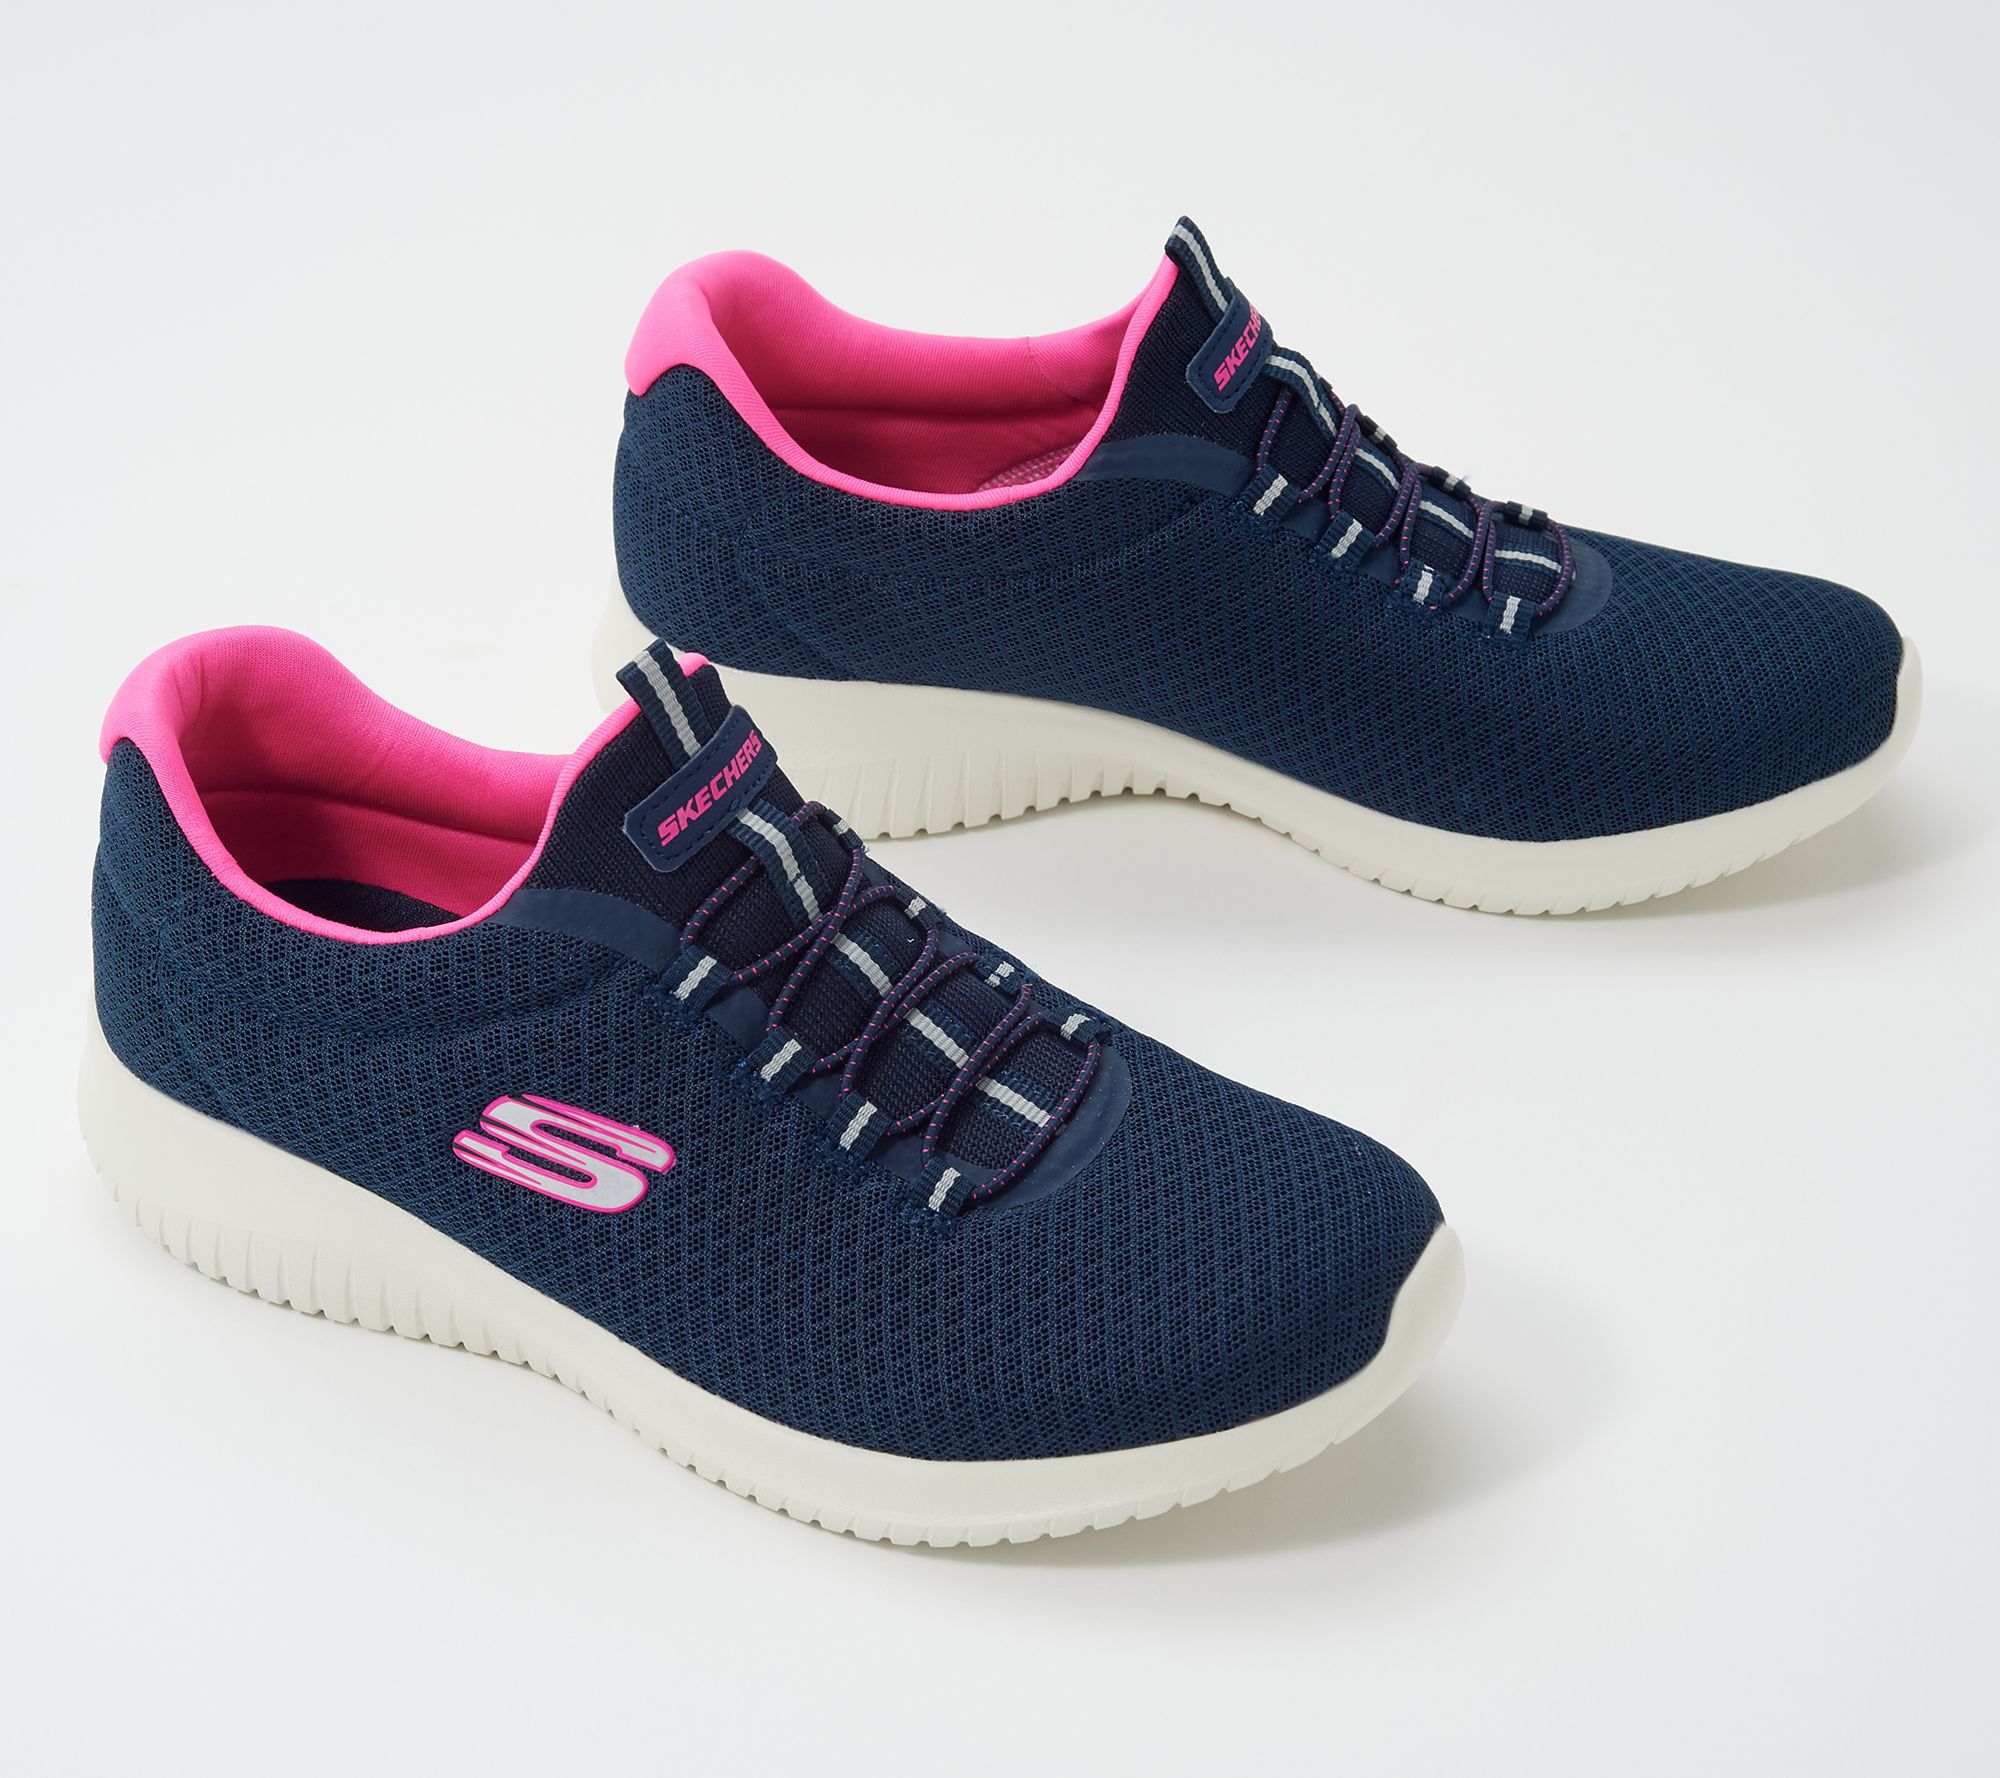 Skechers - Sneakers \u0026 Athletic - QVC.com